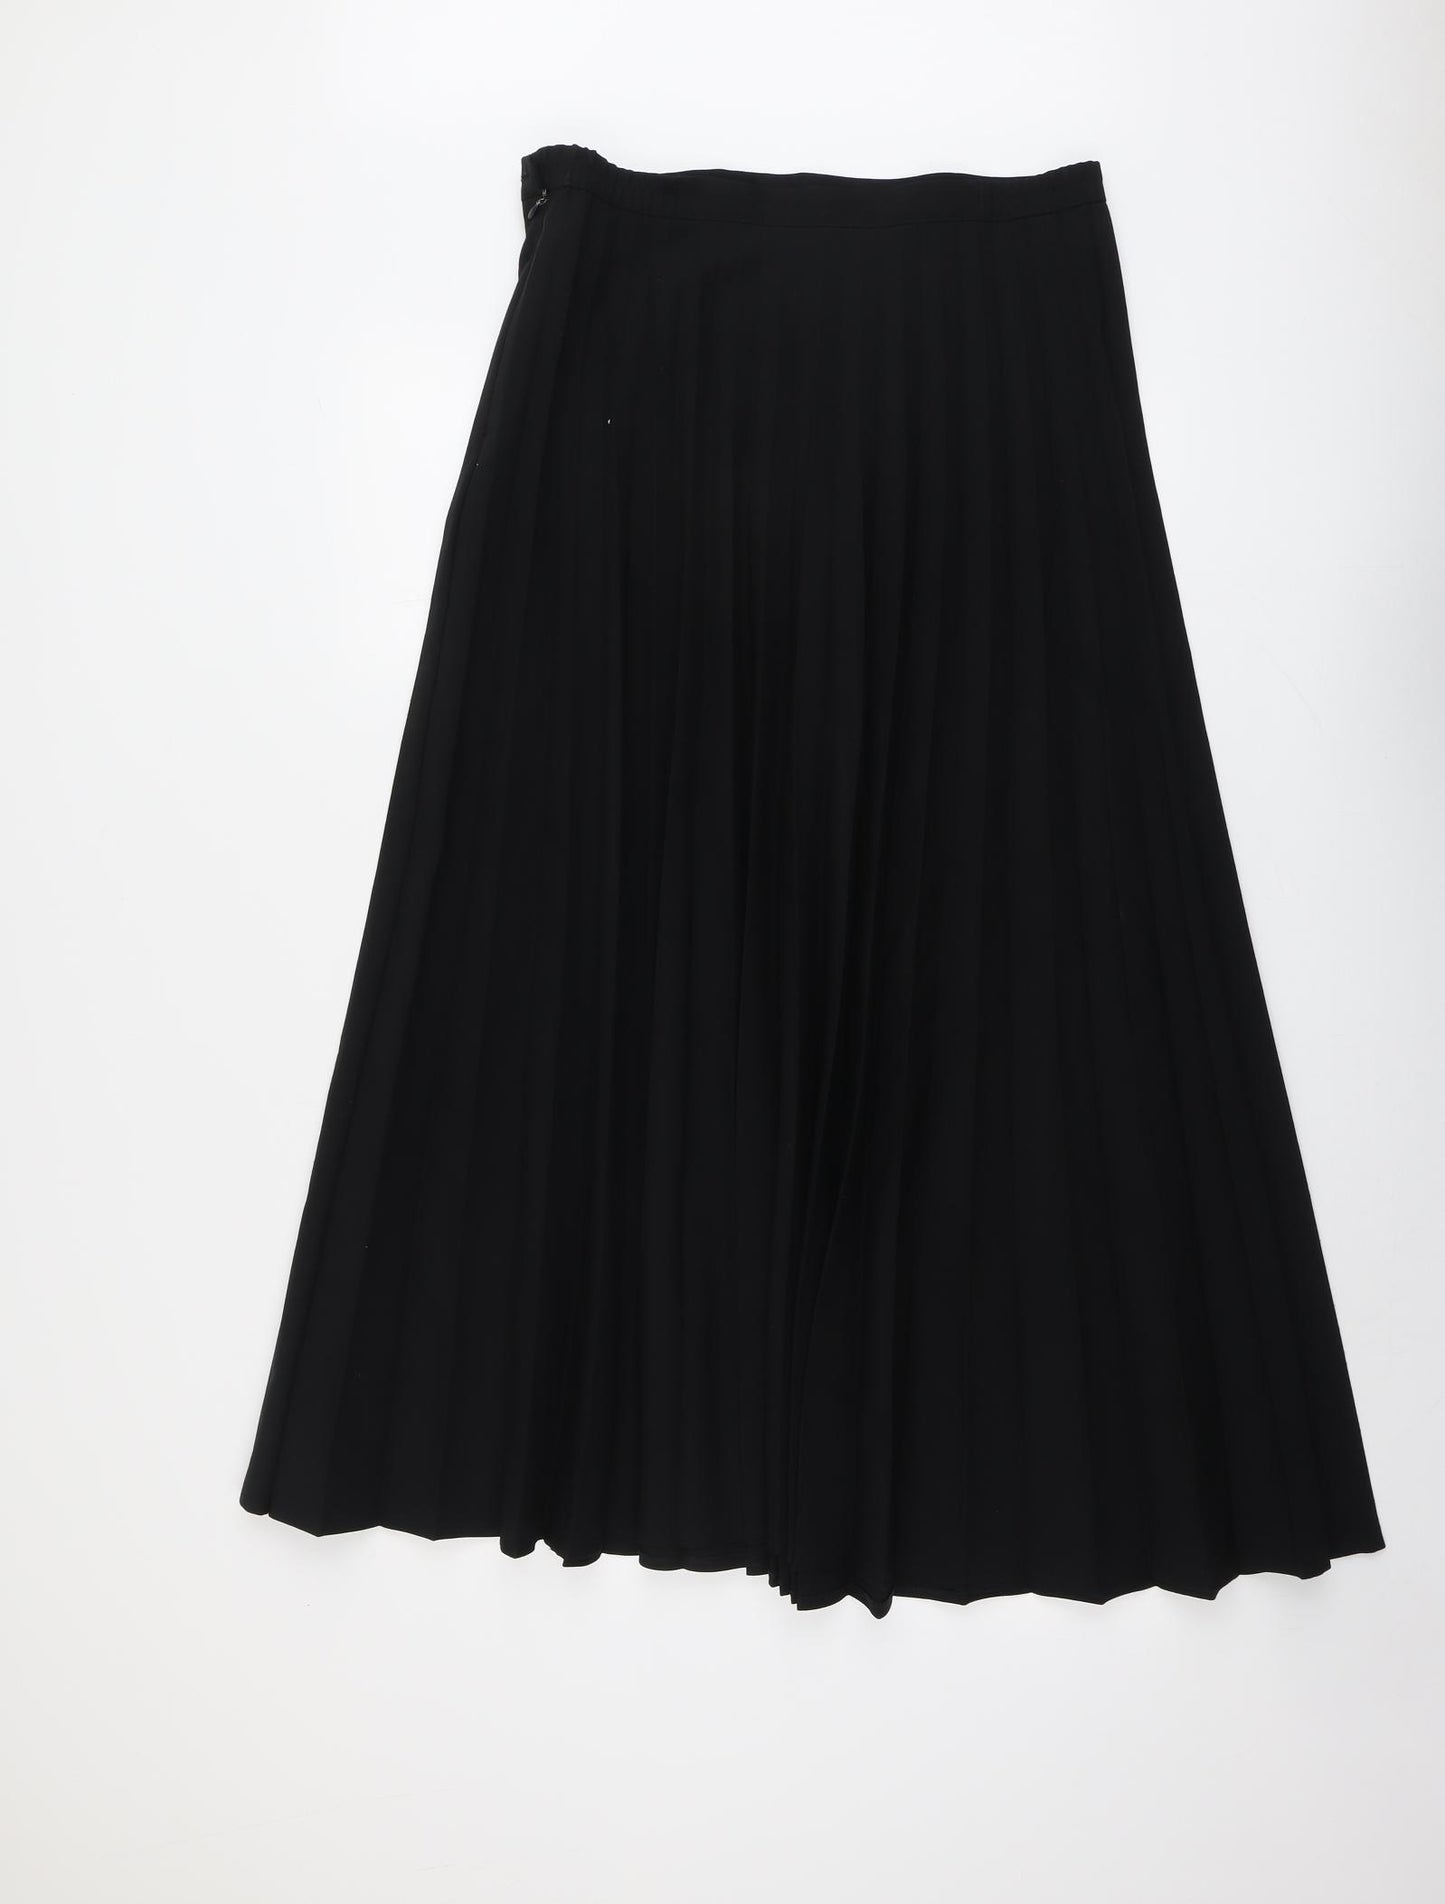 Agenda Womens Black Polyester Pleated Skirt Size 16 Zip